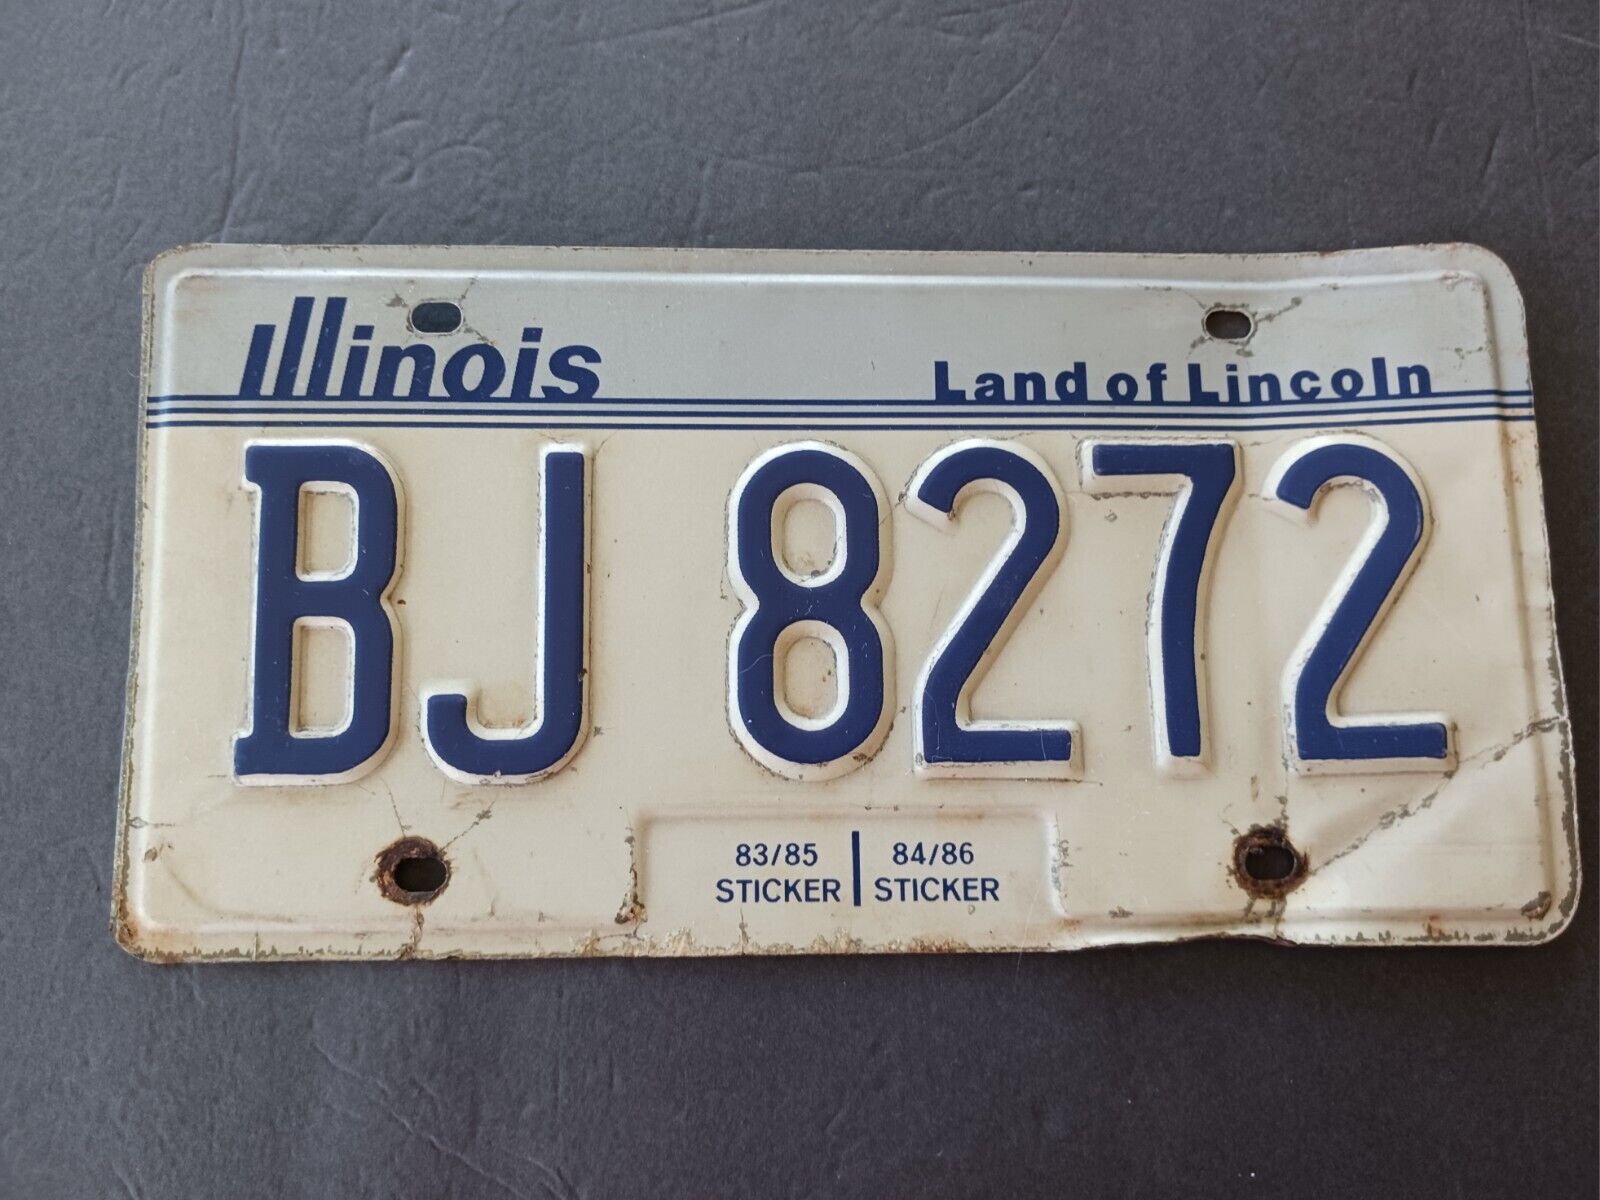 1998 Illinois License Plate BJ 8272